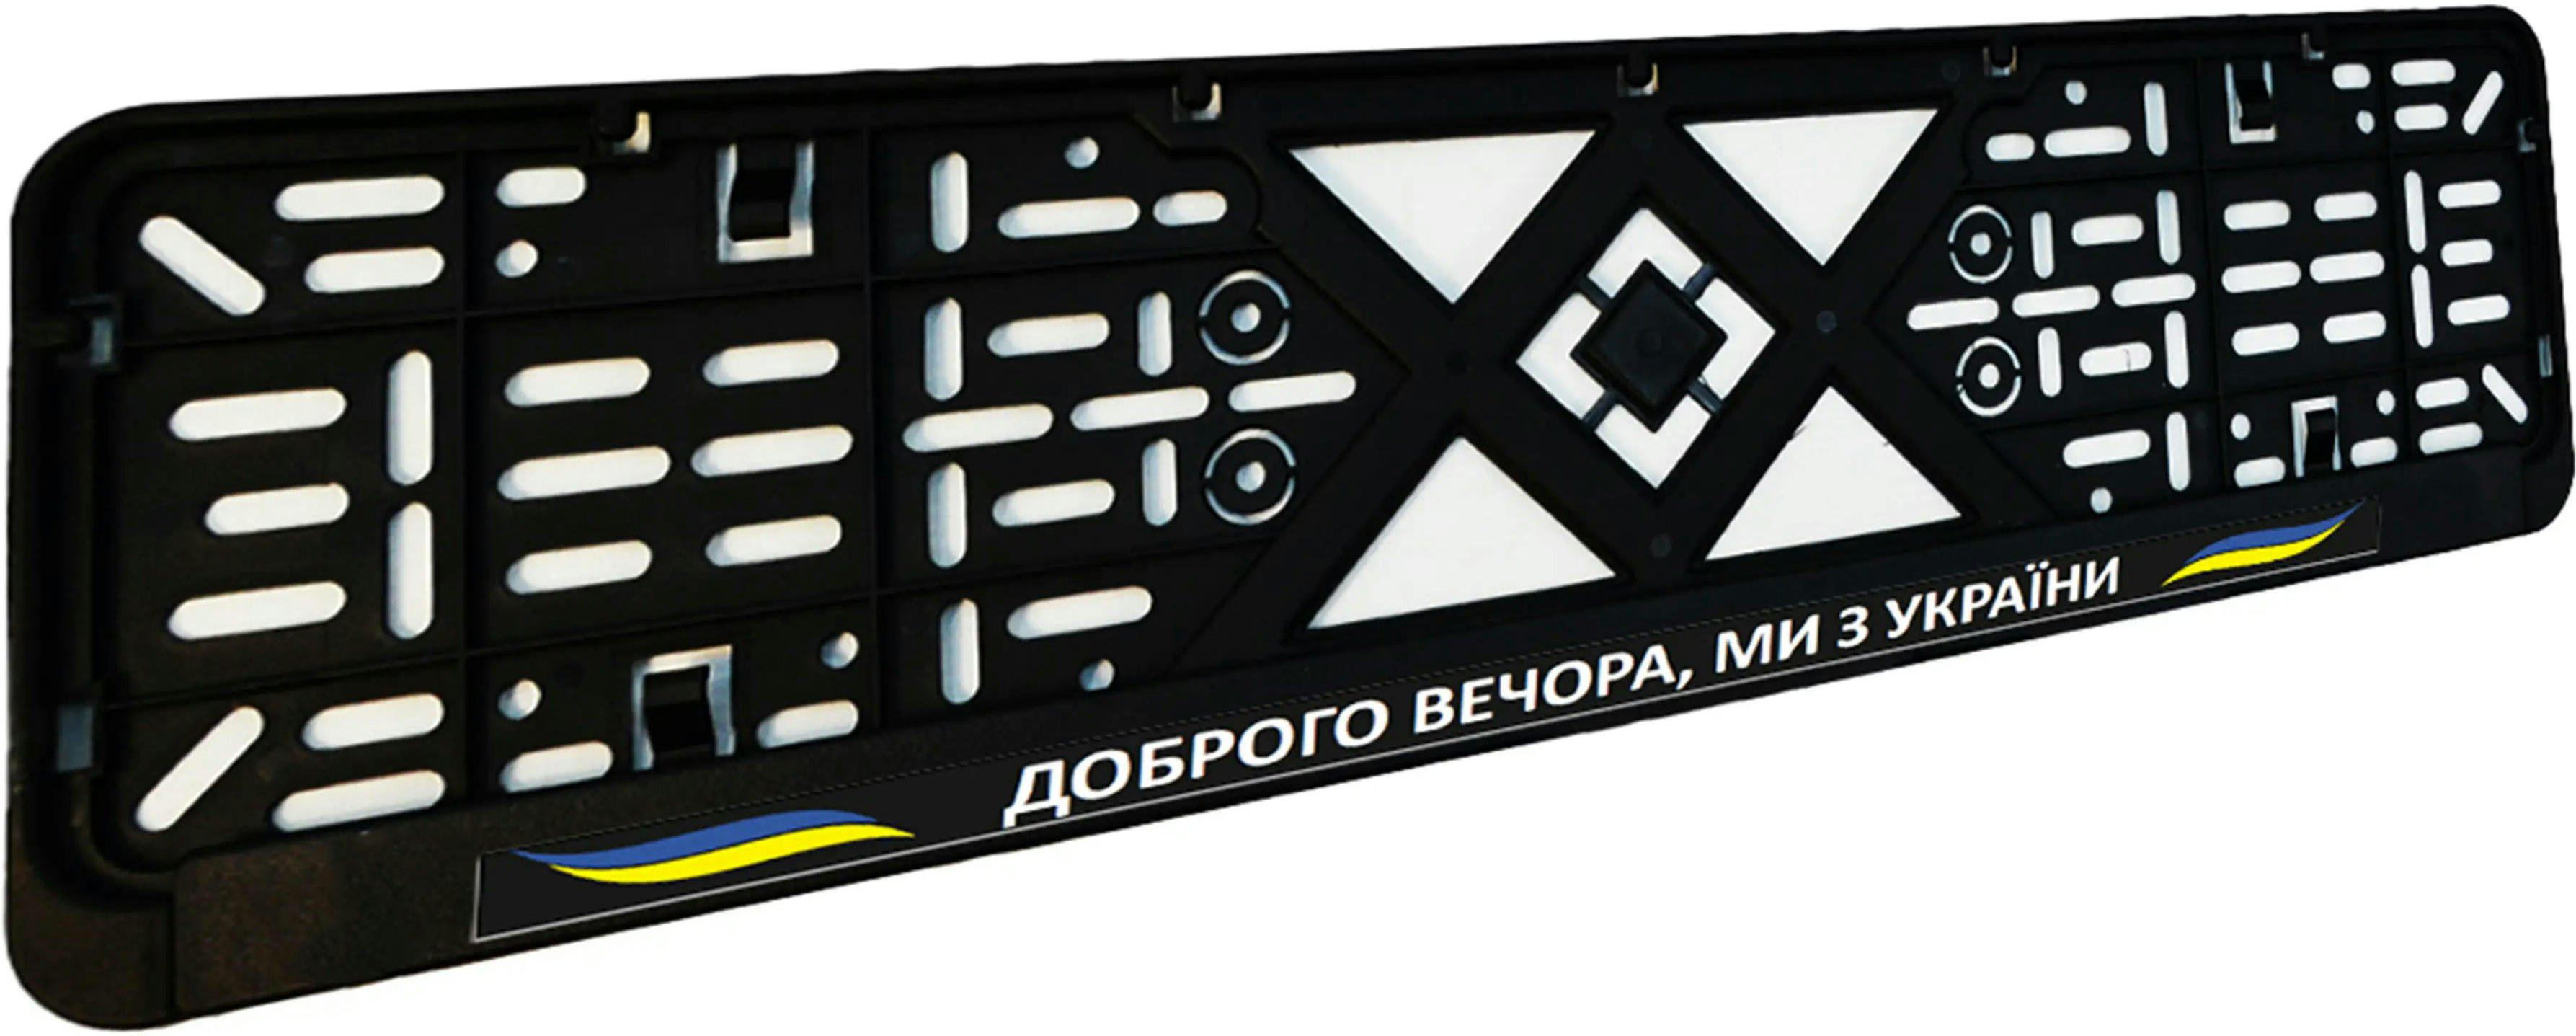 Рамка номерного знака Poputchik пластикова патріотична Доброго вечора, ми з України (24-268-IS)фото3